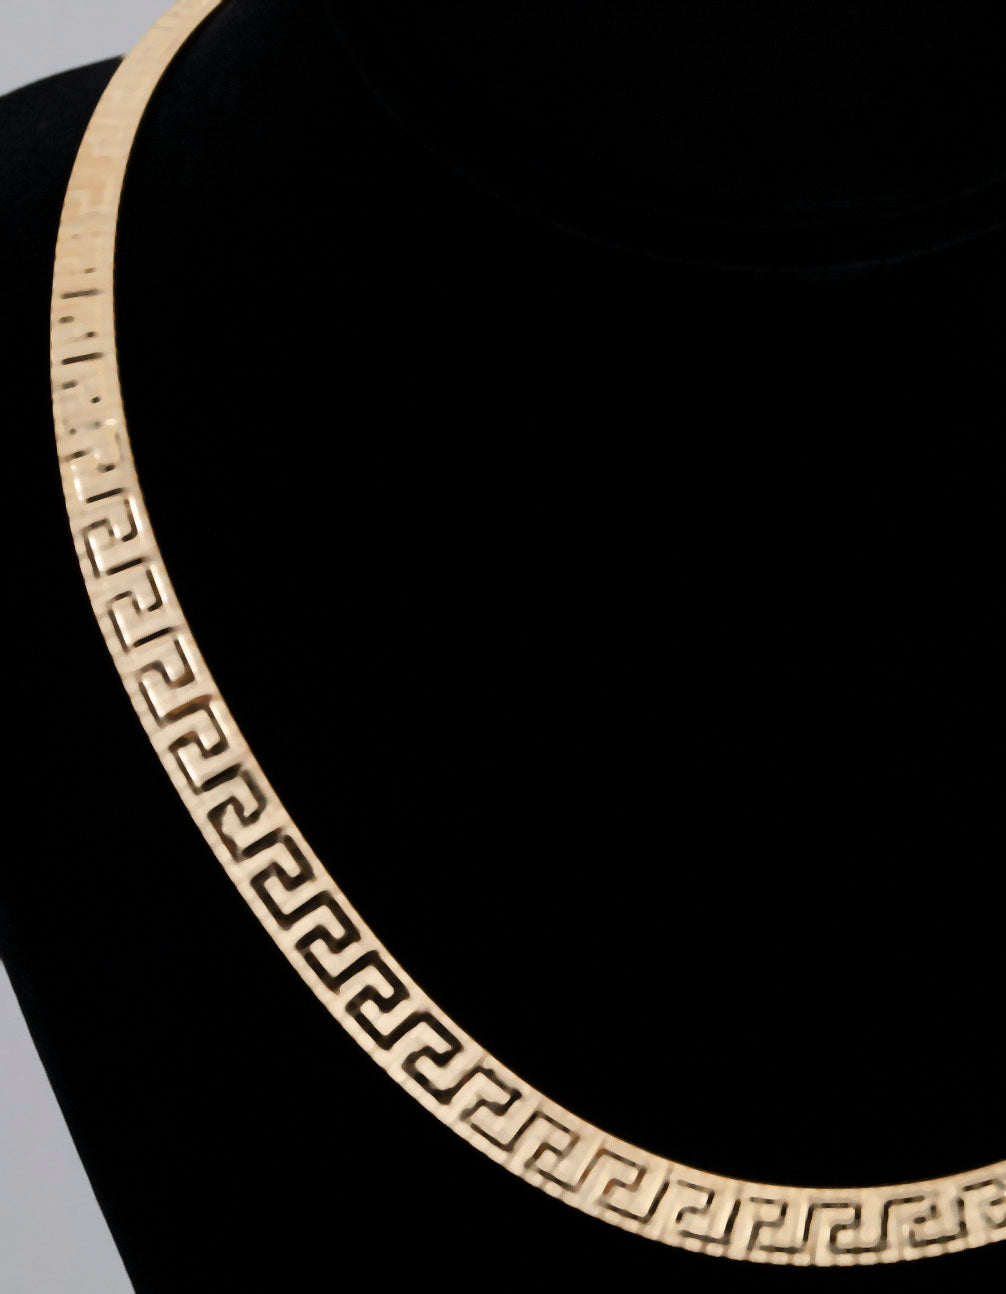 Greek Key Pendant Chain Link Necklace - Approximately 18